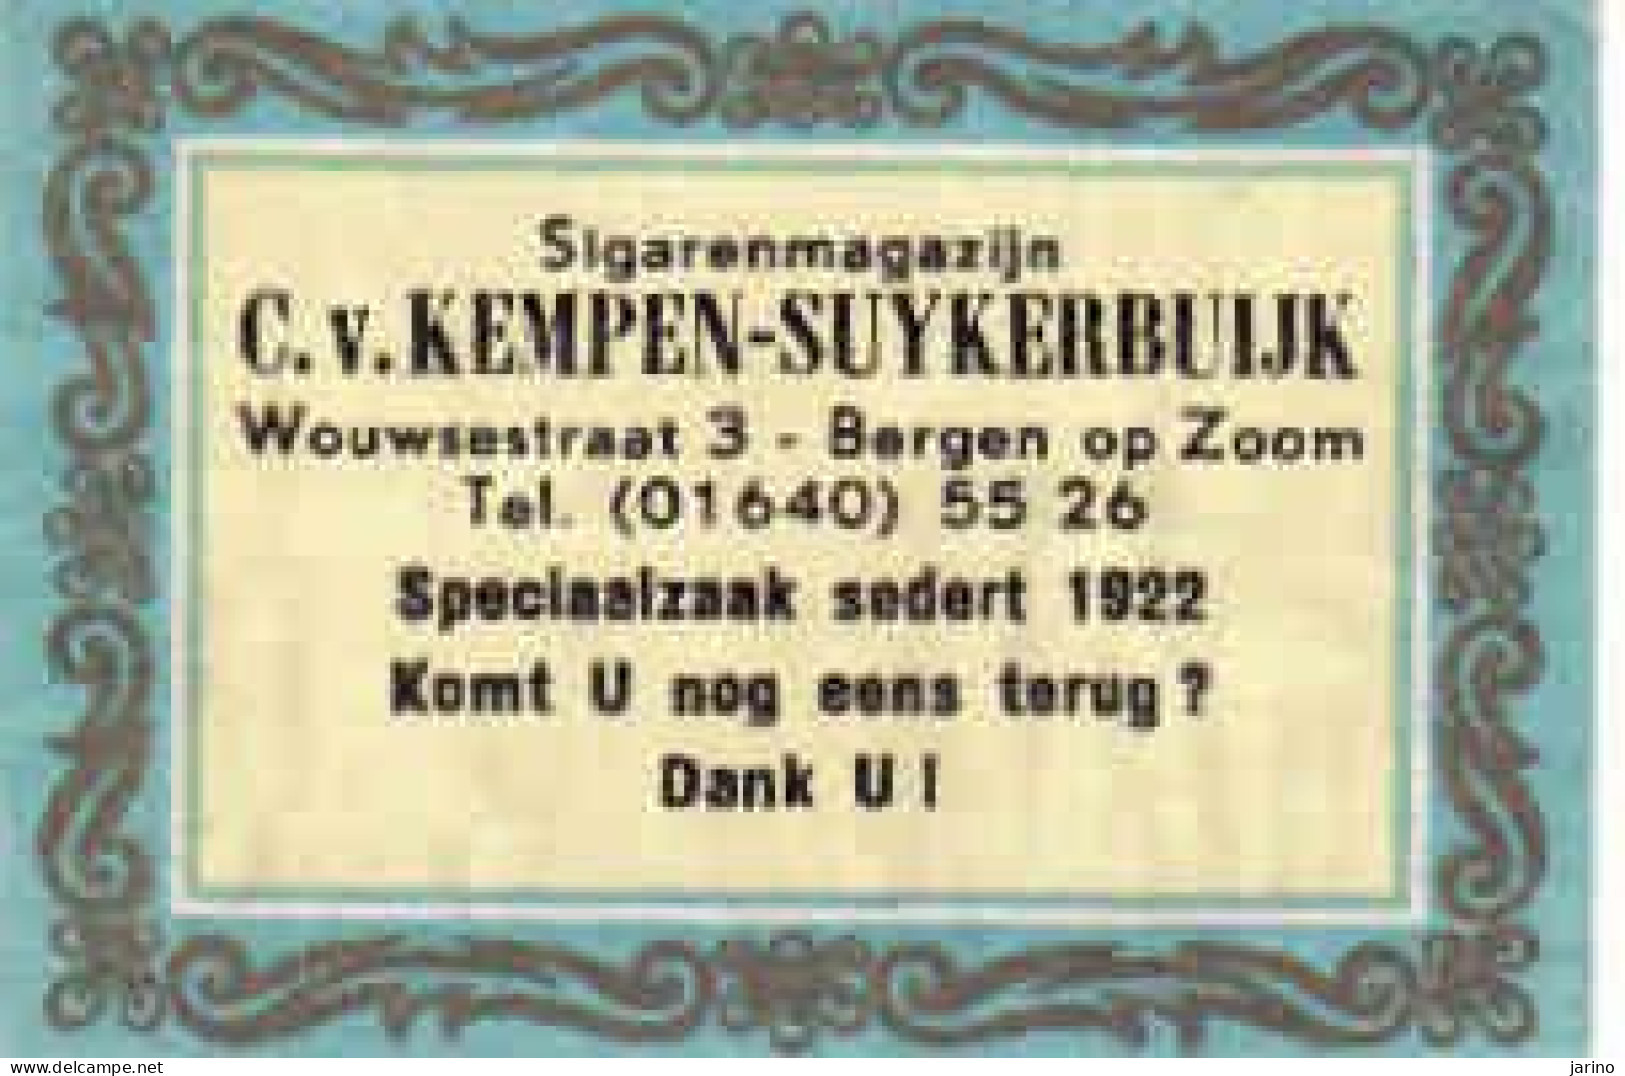 Dutch Matchbox Label, Bergen Op Zoom - North Brabant, Sigarenmagazijn C. V. KEMPEN - SUYKERBUIJK, Holland, Netherlands - Matchbox Labels